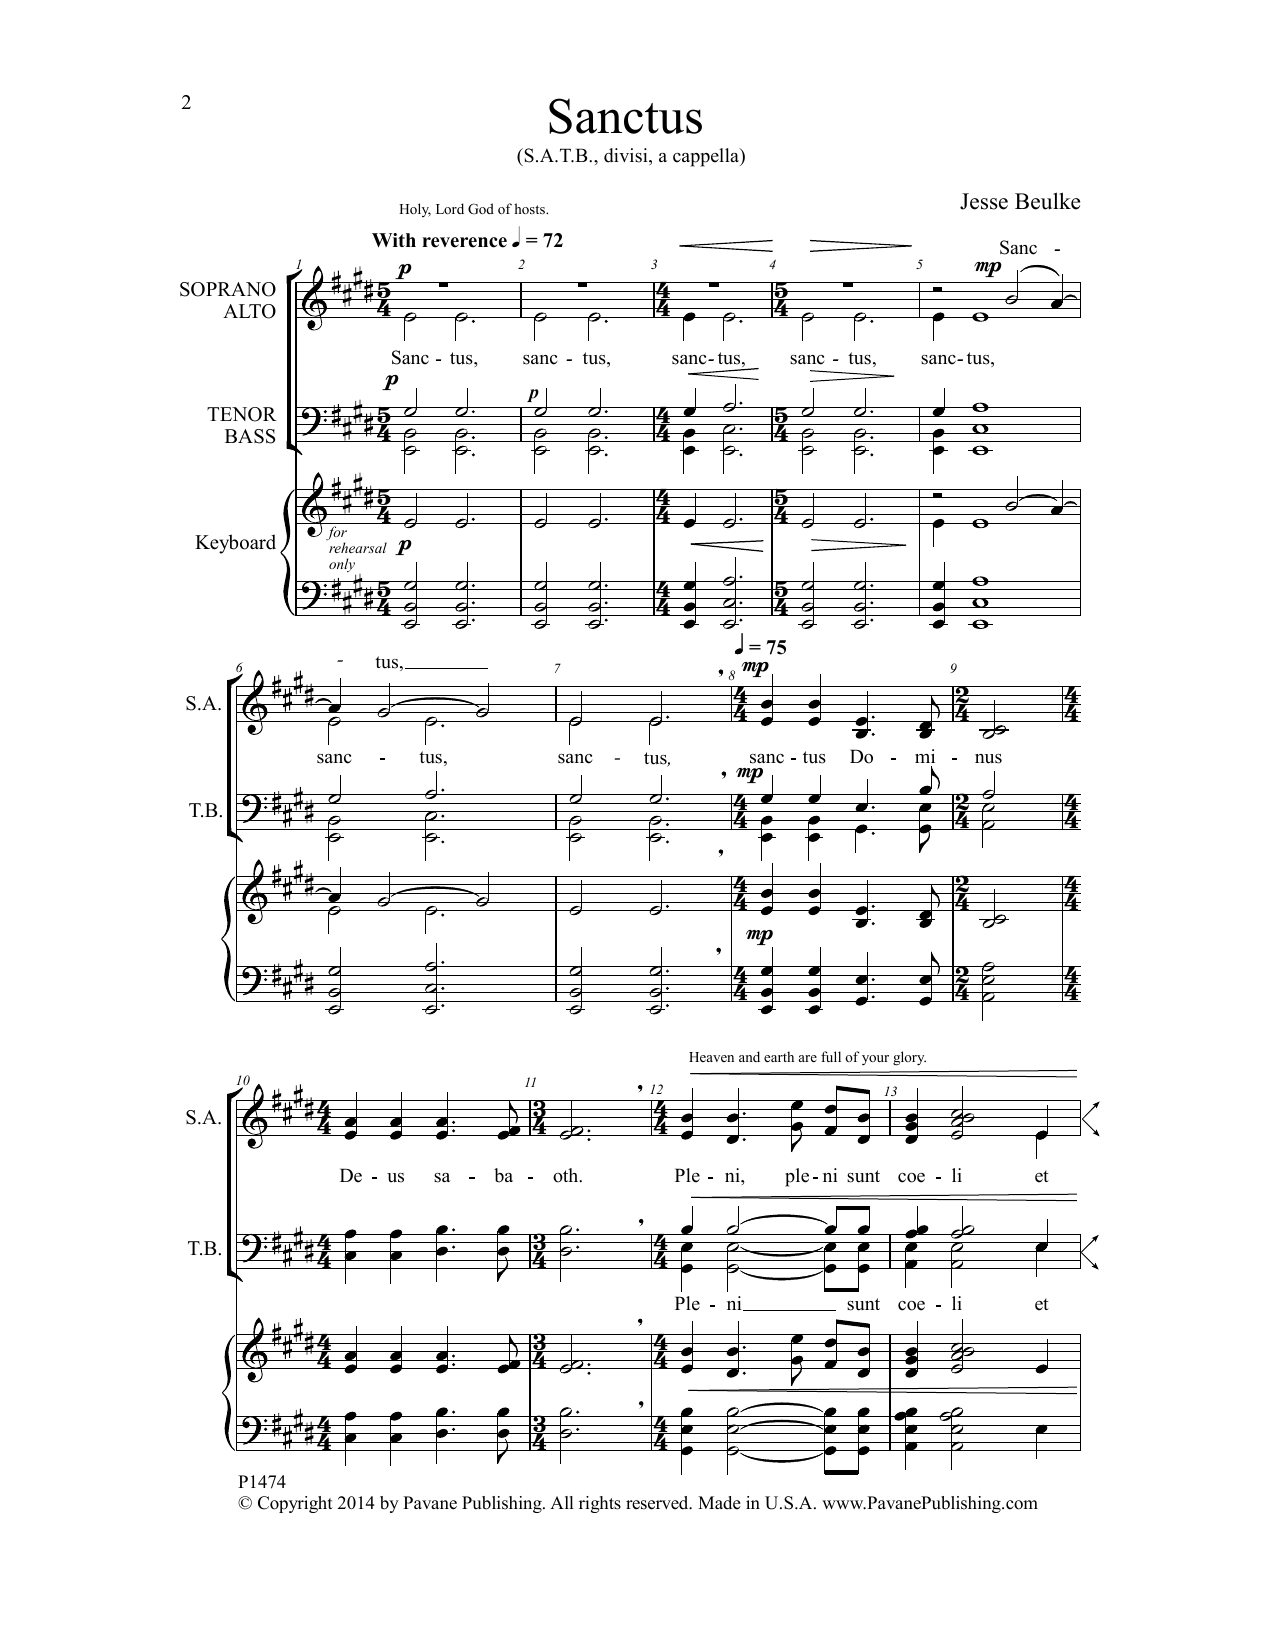 Jesse Beulke Sanctus Sheet Music Notes & Chords for Choral - Download or Print PDF